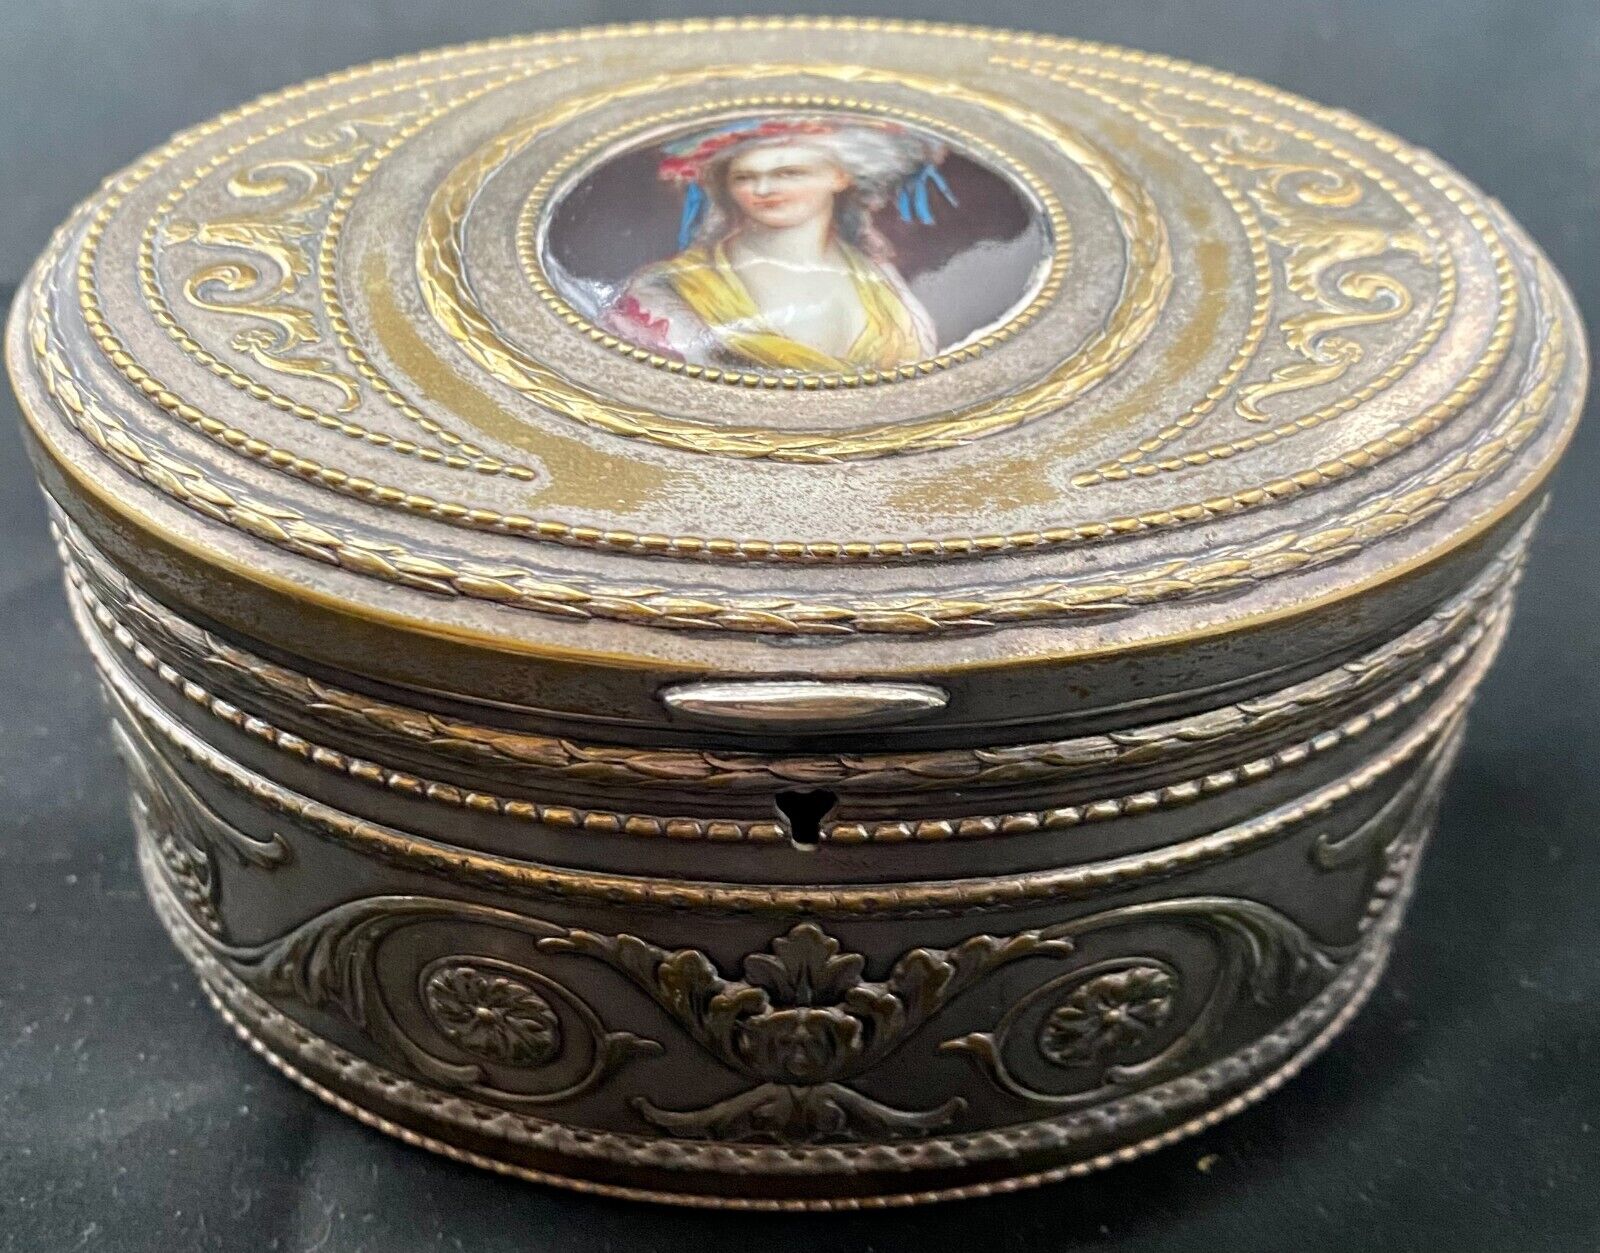 BEAUTY ANTIQUE WMF SILVER PLATED JEWELRY BOX WOMAN PORTRAIT PORCELAIN c1910 v/g